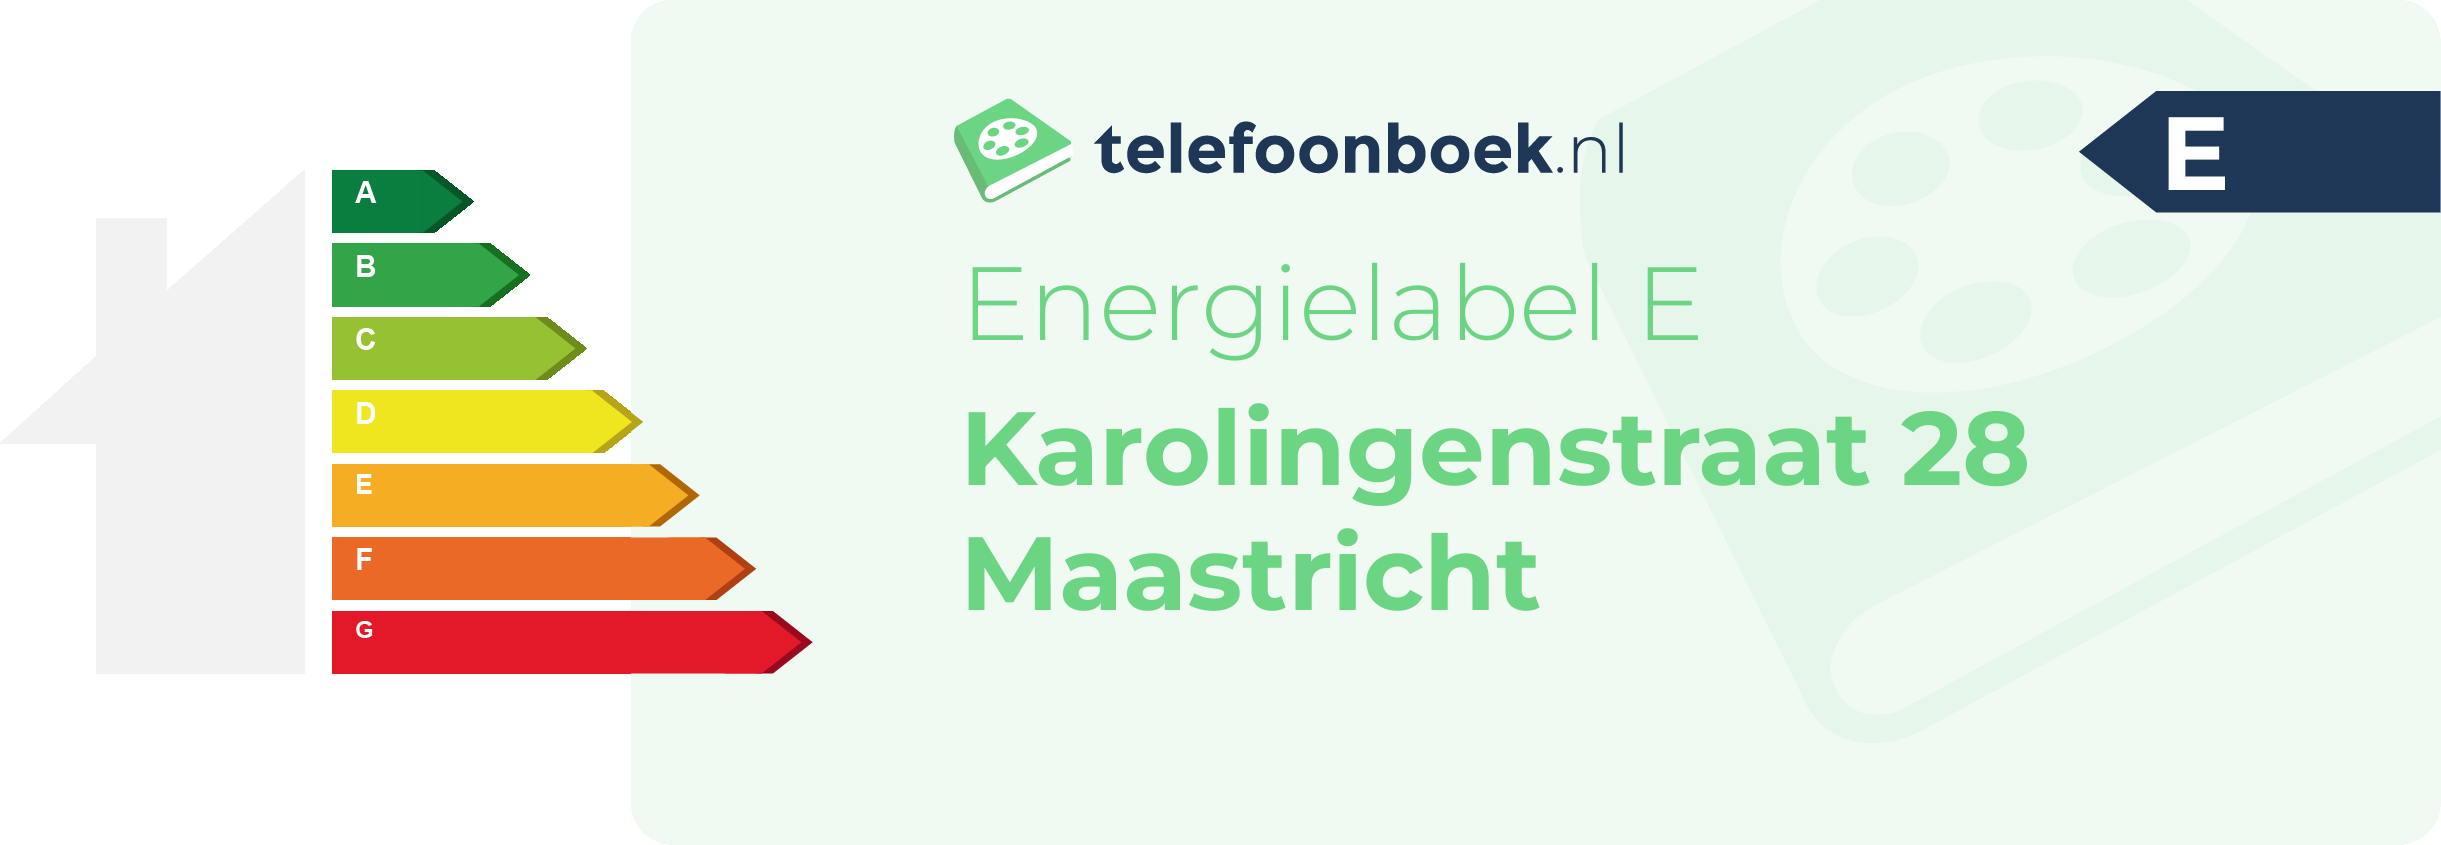 Energielabel Karolingenstraat 28 Maastricht